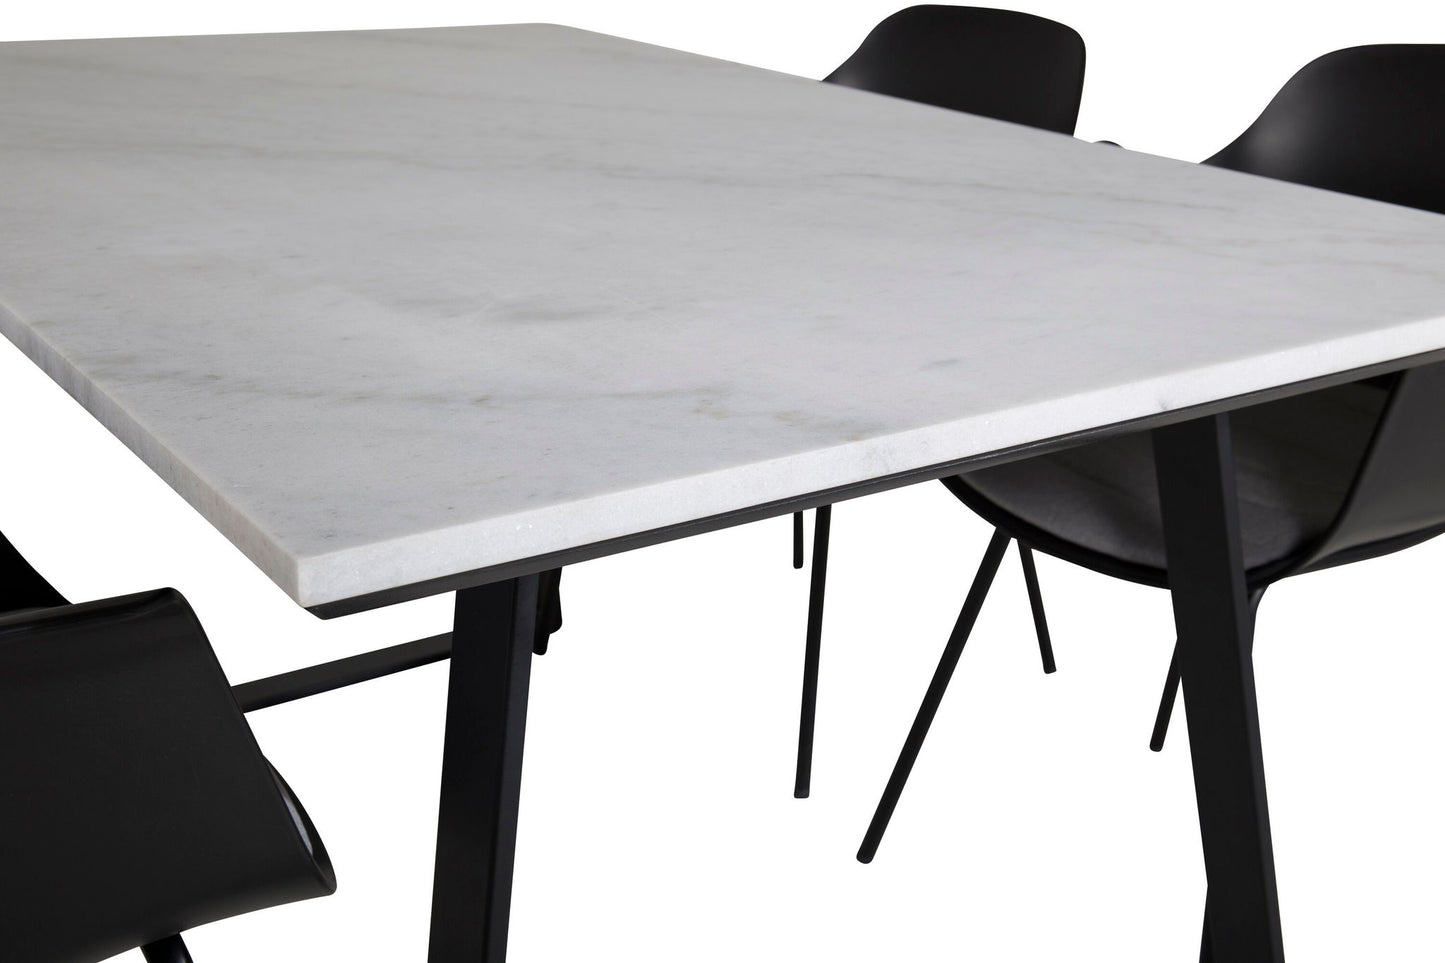 Estelle - Spisebord, 140*90 - Hvid / Sort+Comfort Plast Spisebordsstol - Sorte ben - Sort Plast